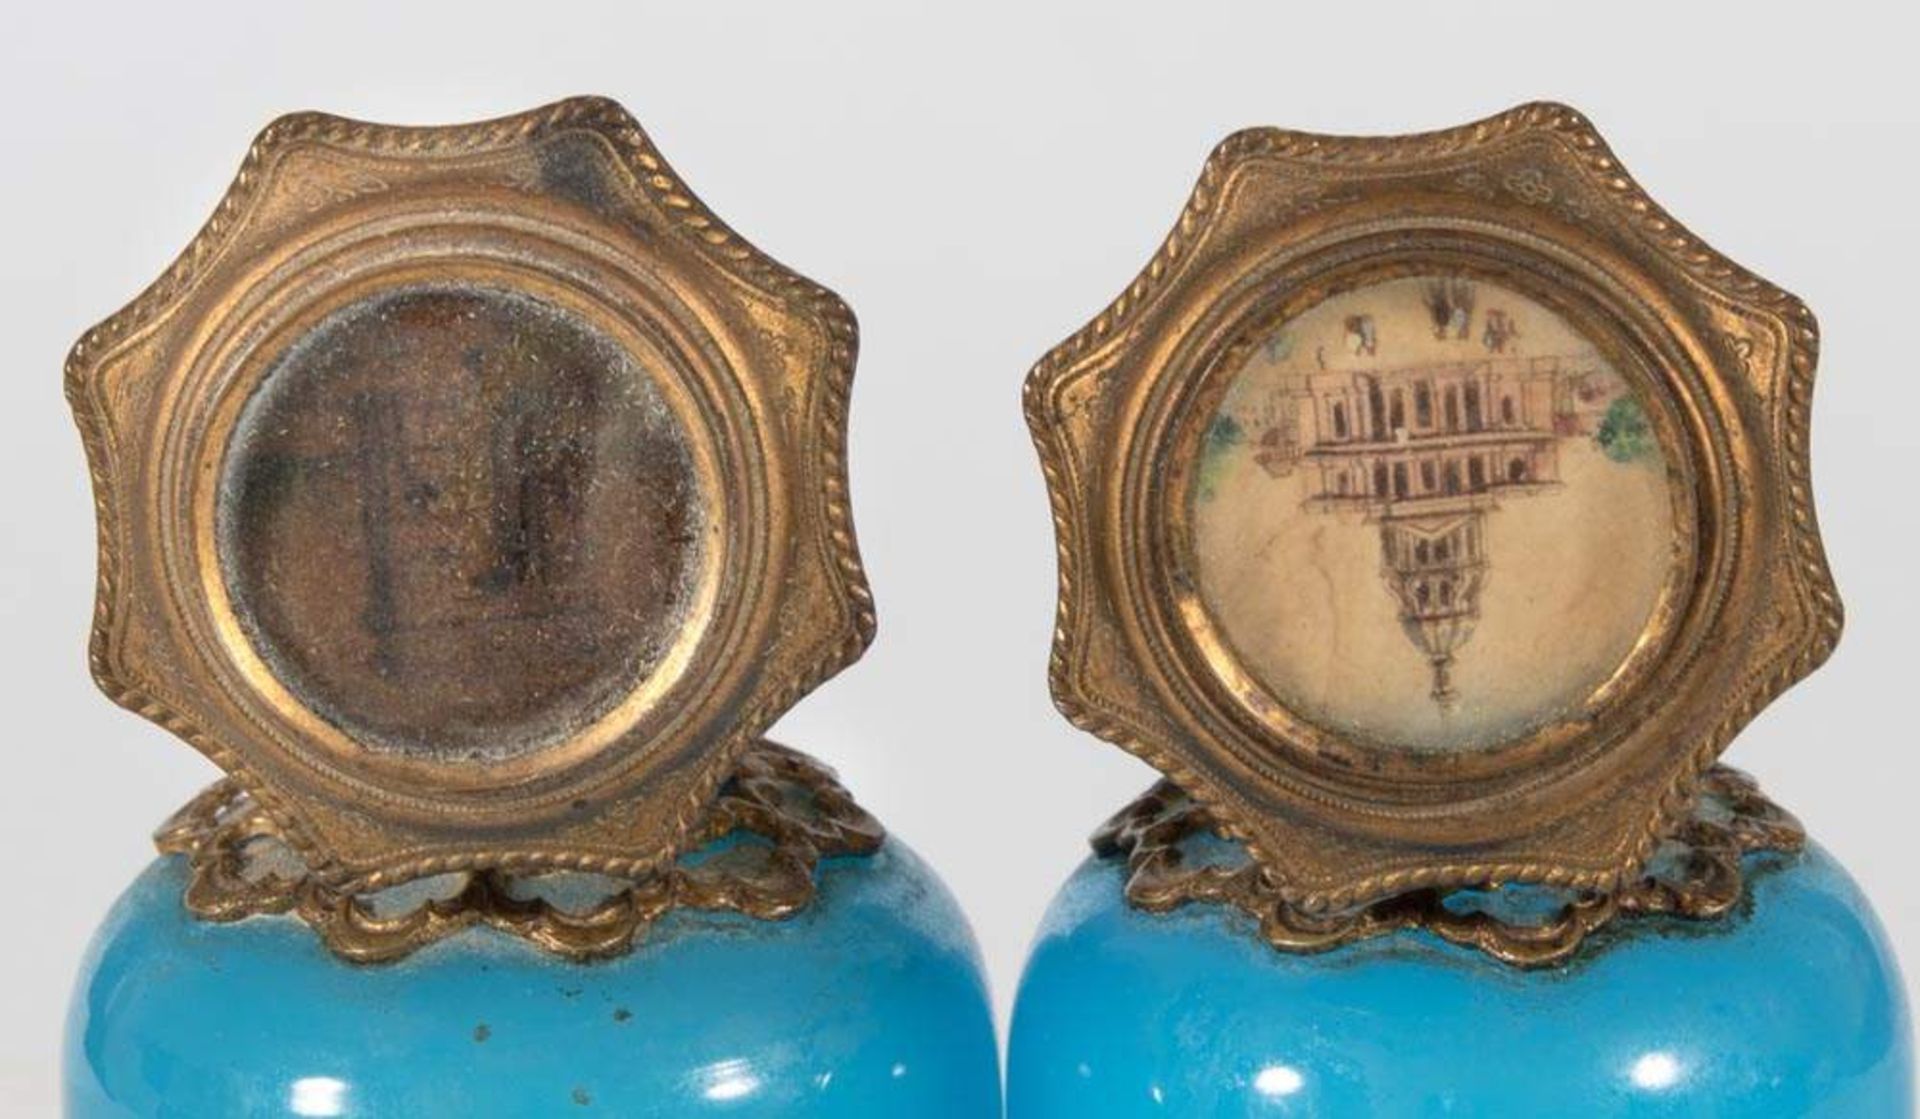 Paar Parfüm Flacons in original Deckelschatulle. Blaue Glasflakons mit Messingblechbeschlägen, - Image 12 of 12